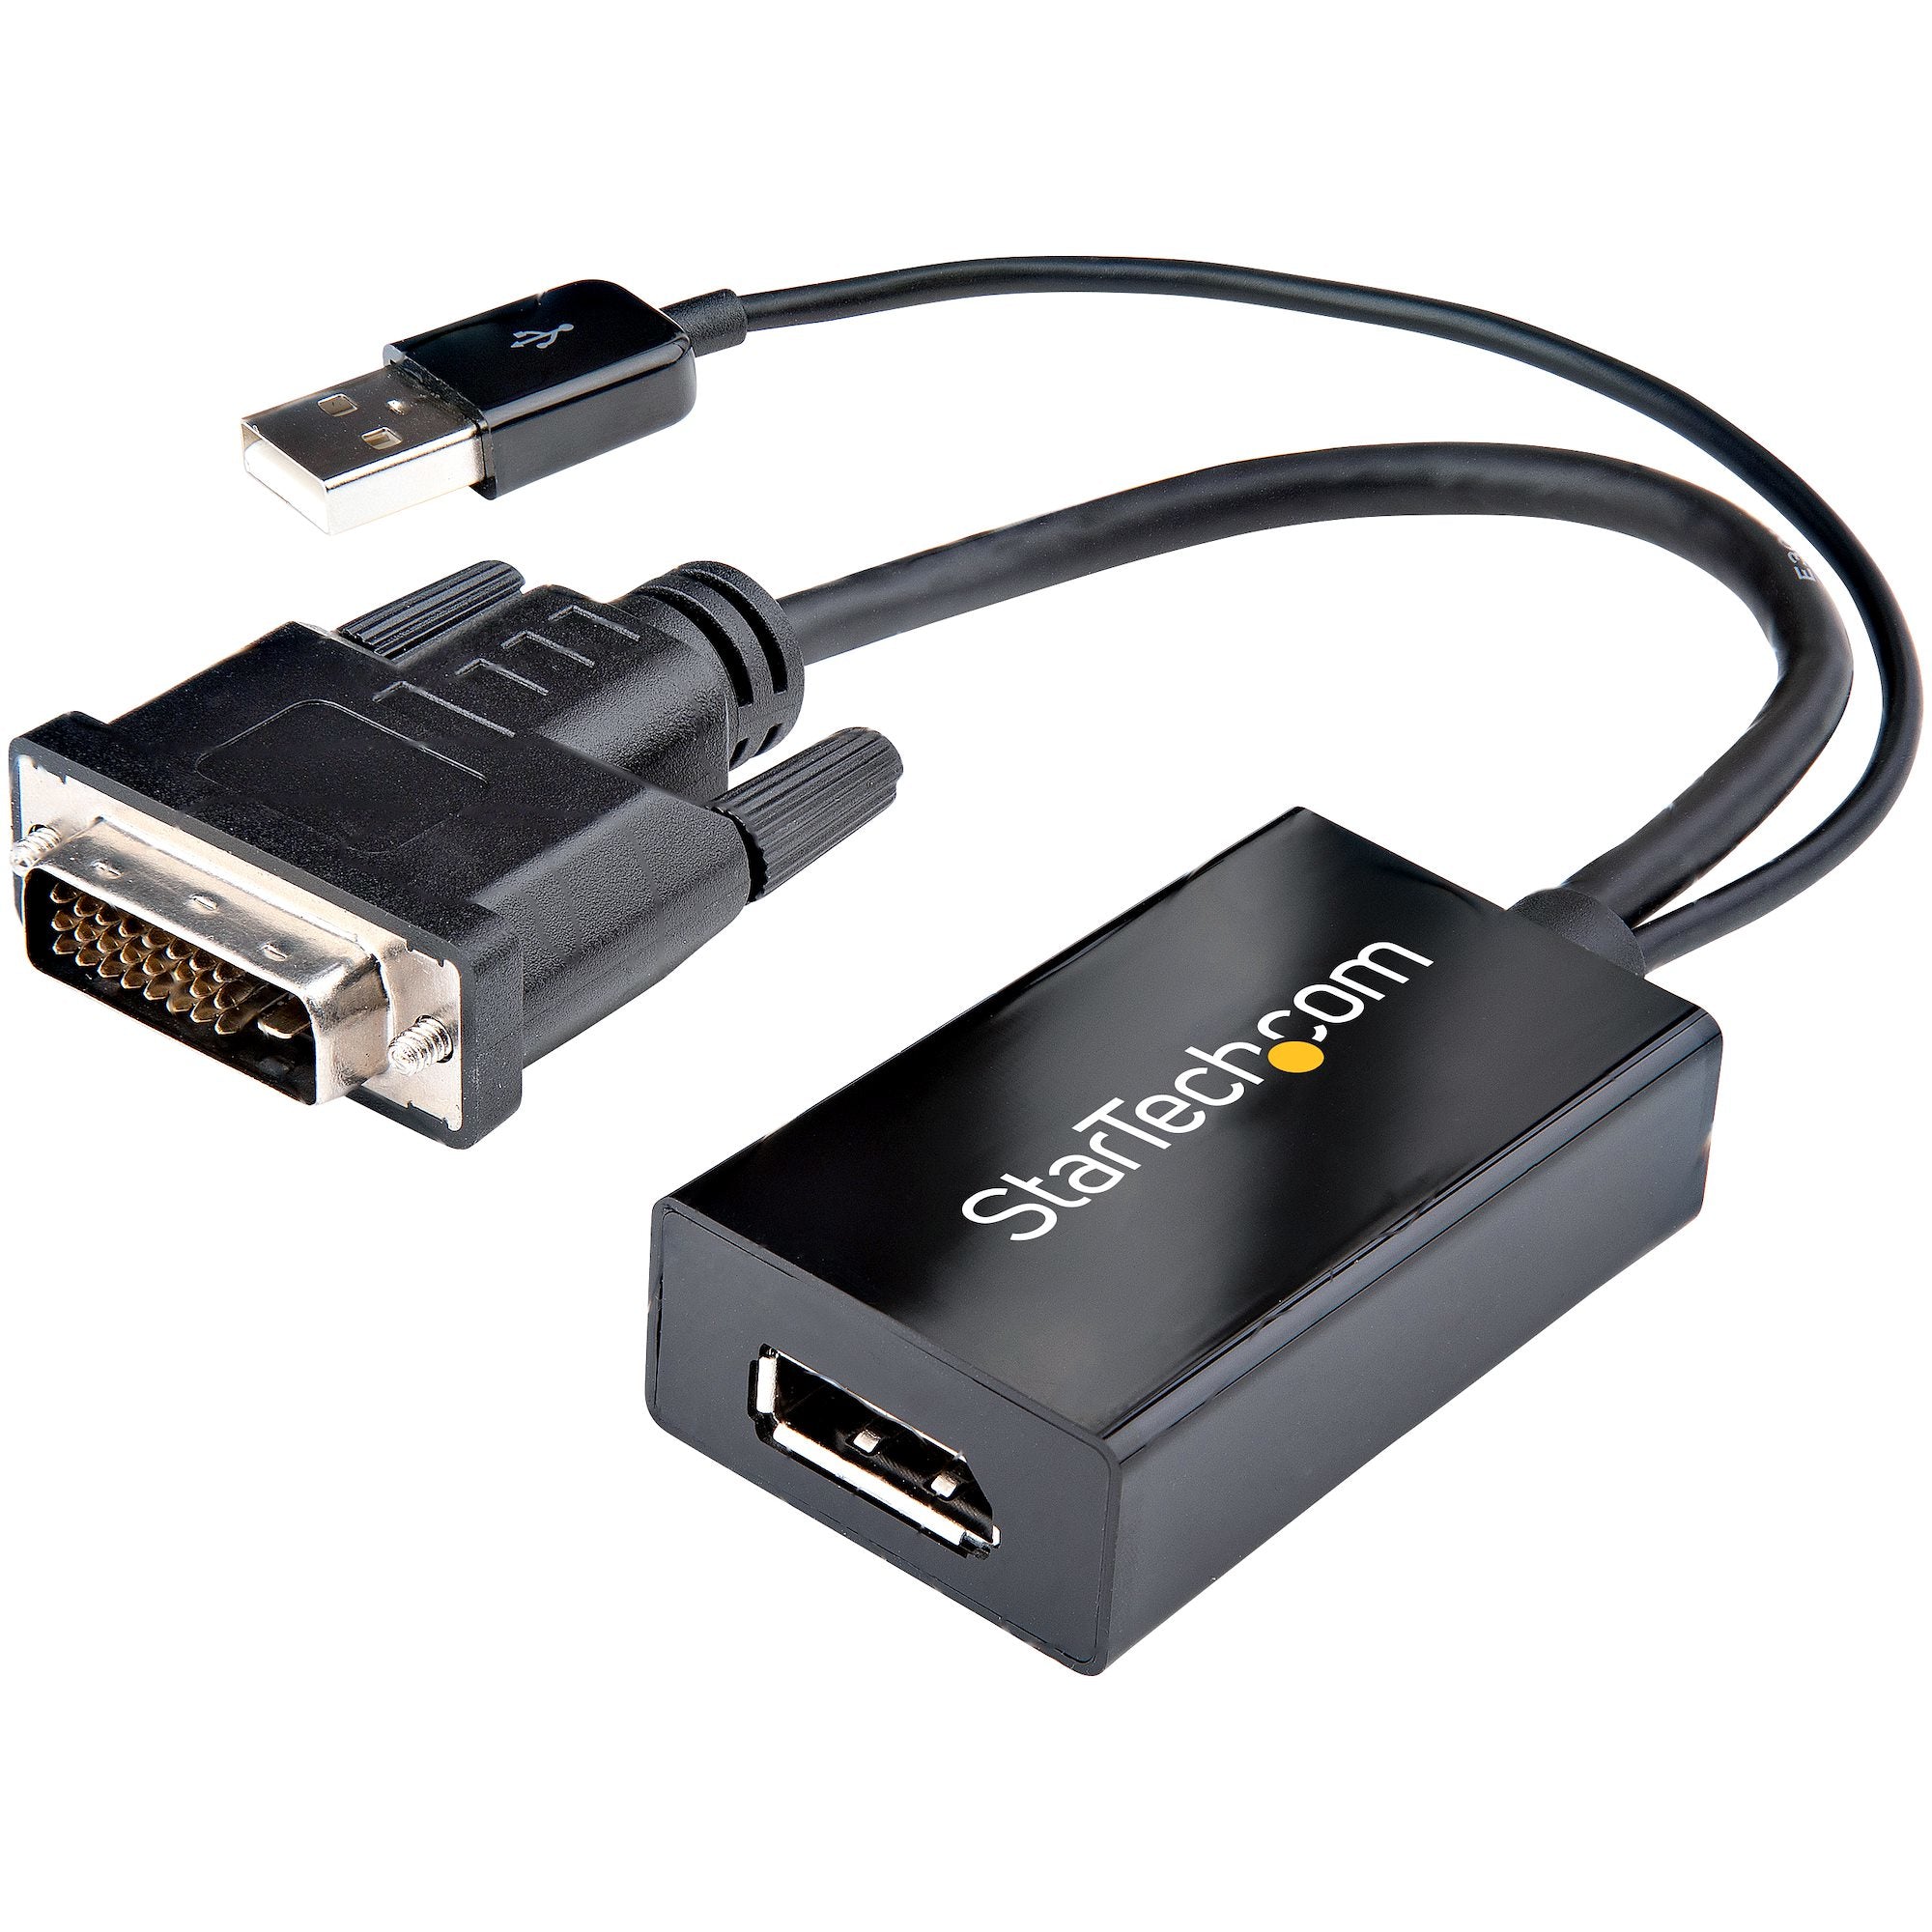 DVI to DisplayPort Adapter - USB Power - 1920 x 1200 - DVI to DisplayPort Converter - Video Adapter - DVI-D to DP